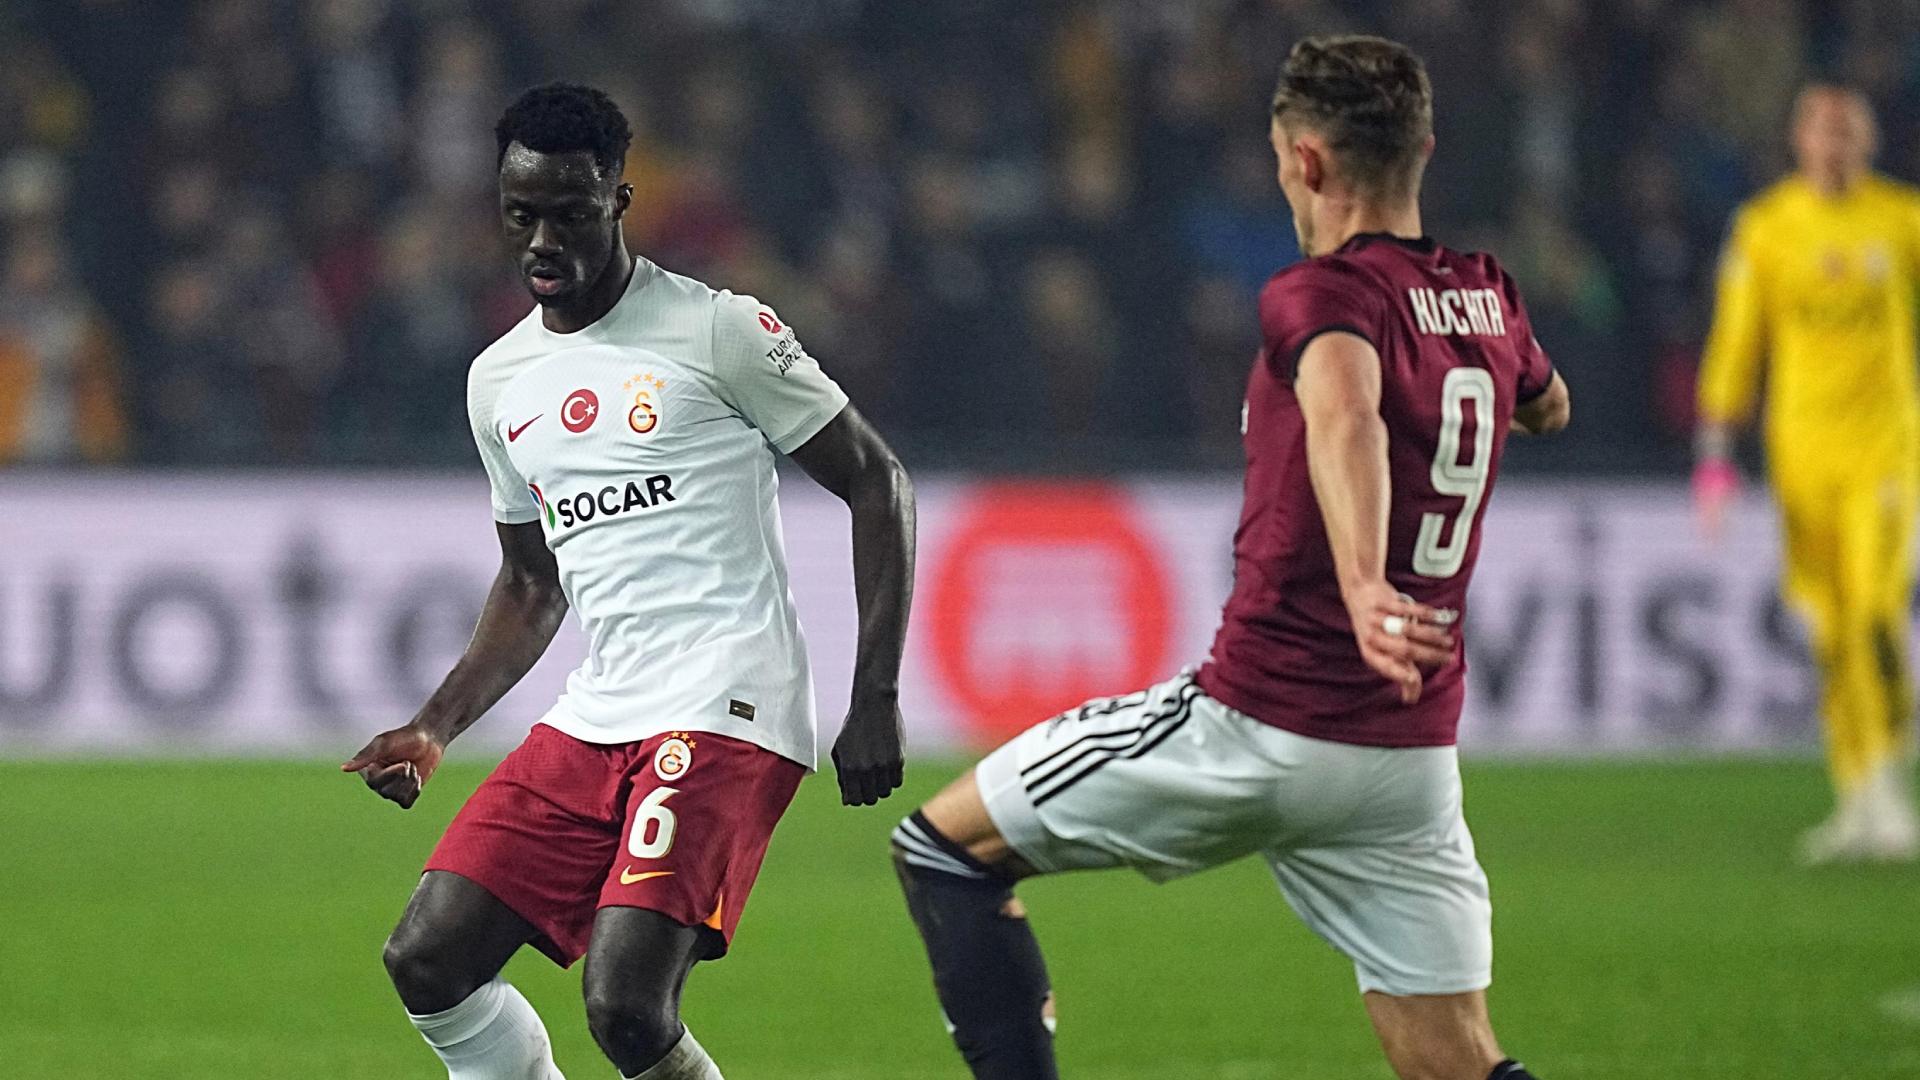 VIDEO | SüperLig Highlights: Ankaragucu vs Galatasaray